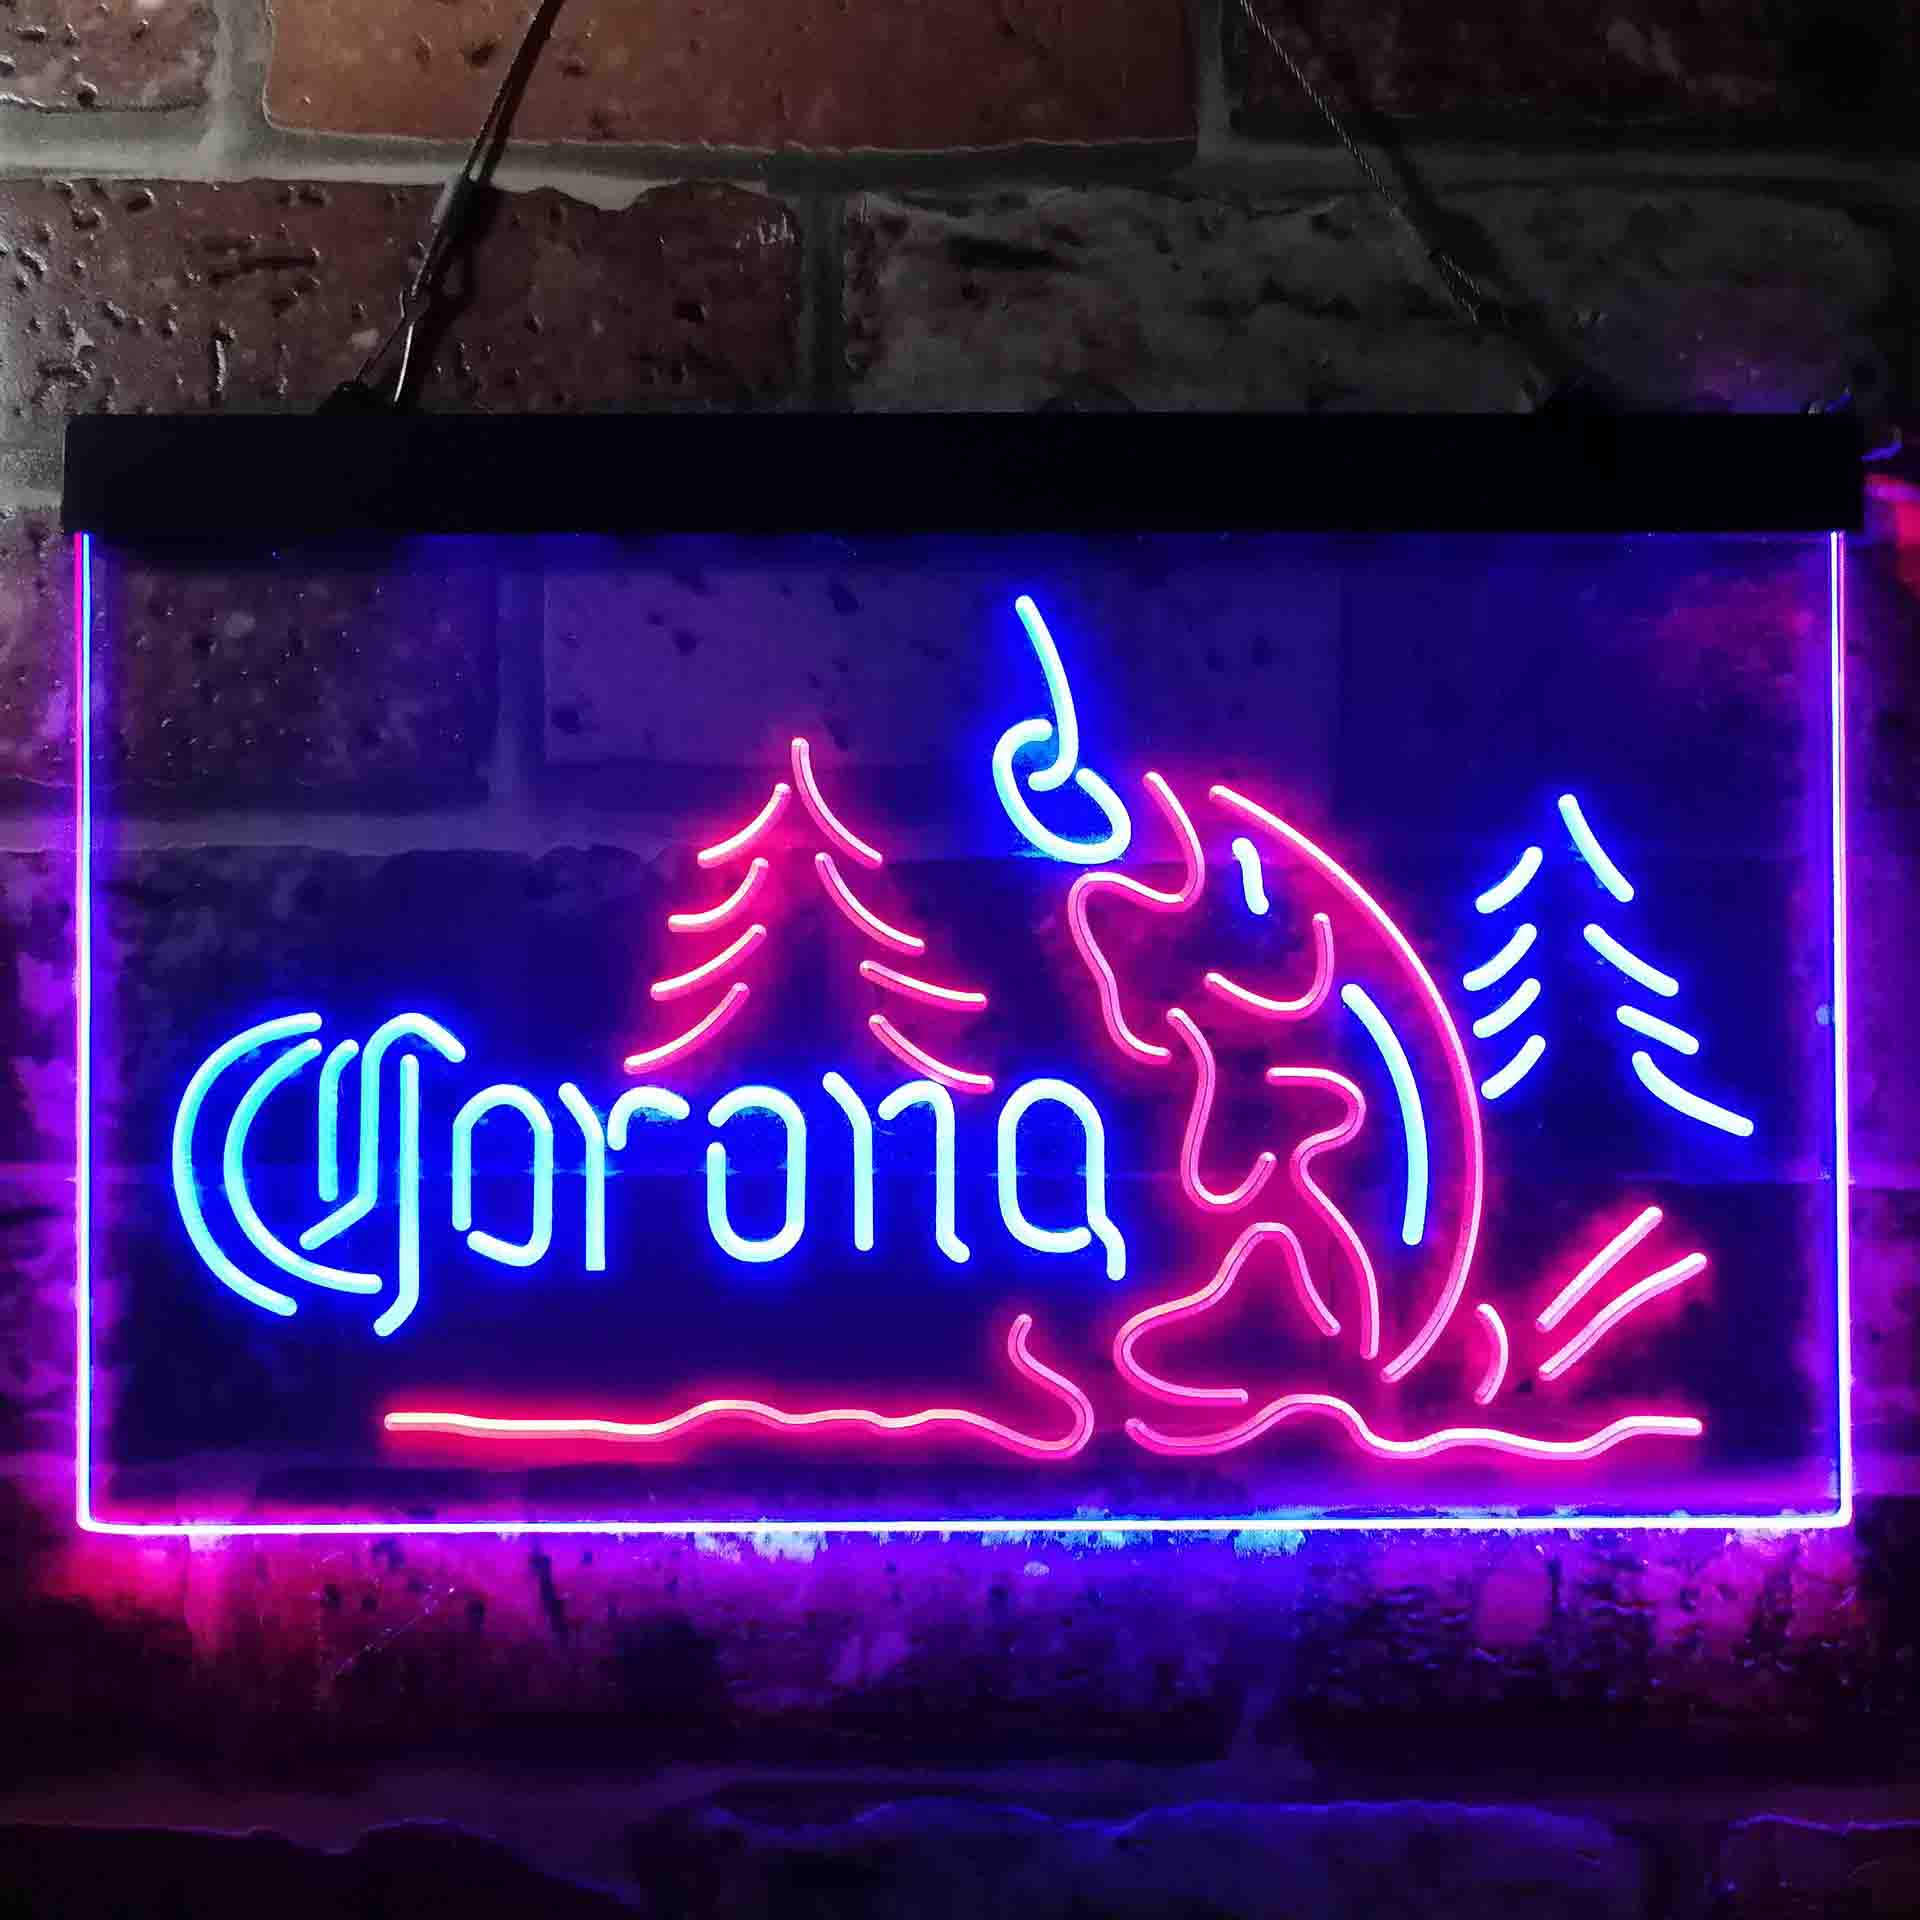 Corona Fishing Cabin House Neon-Like LED Sign